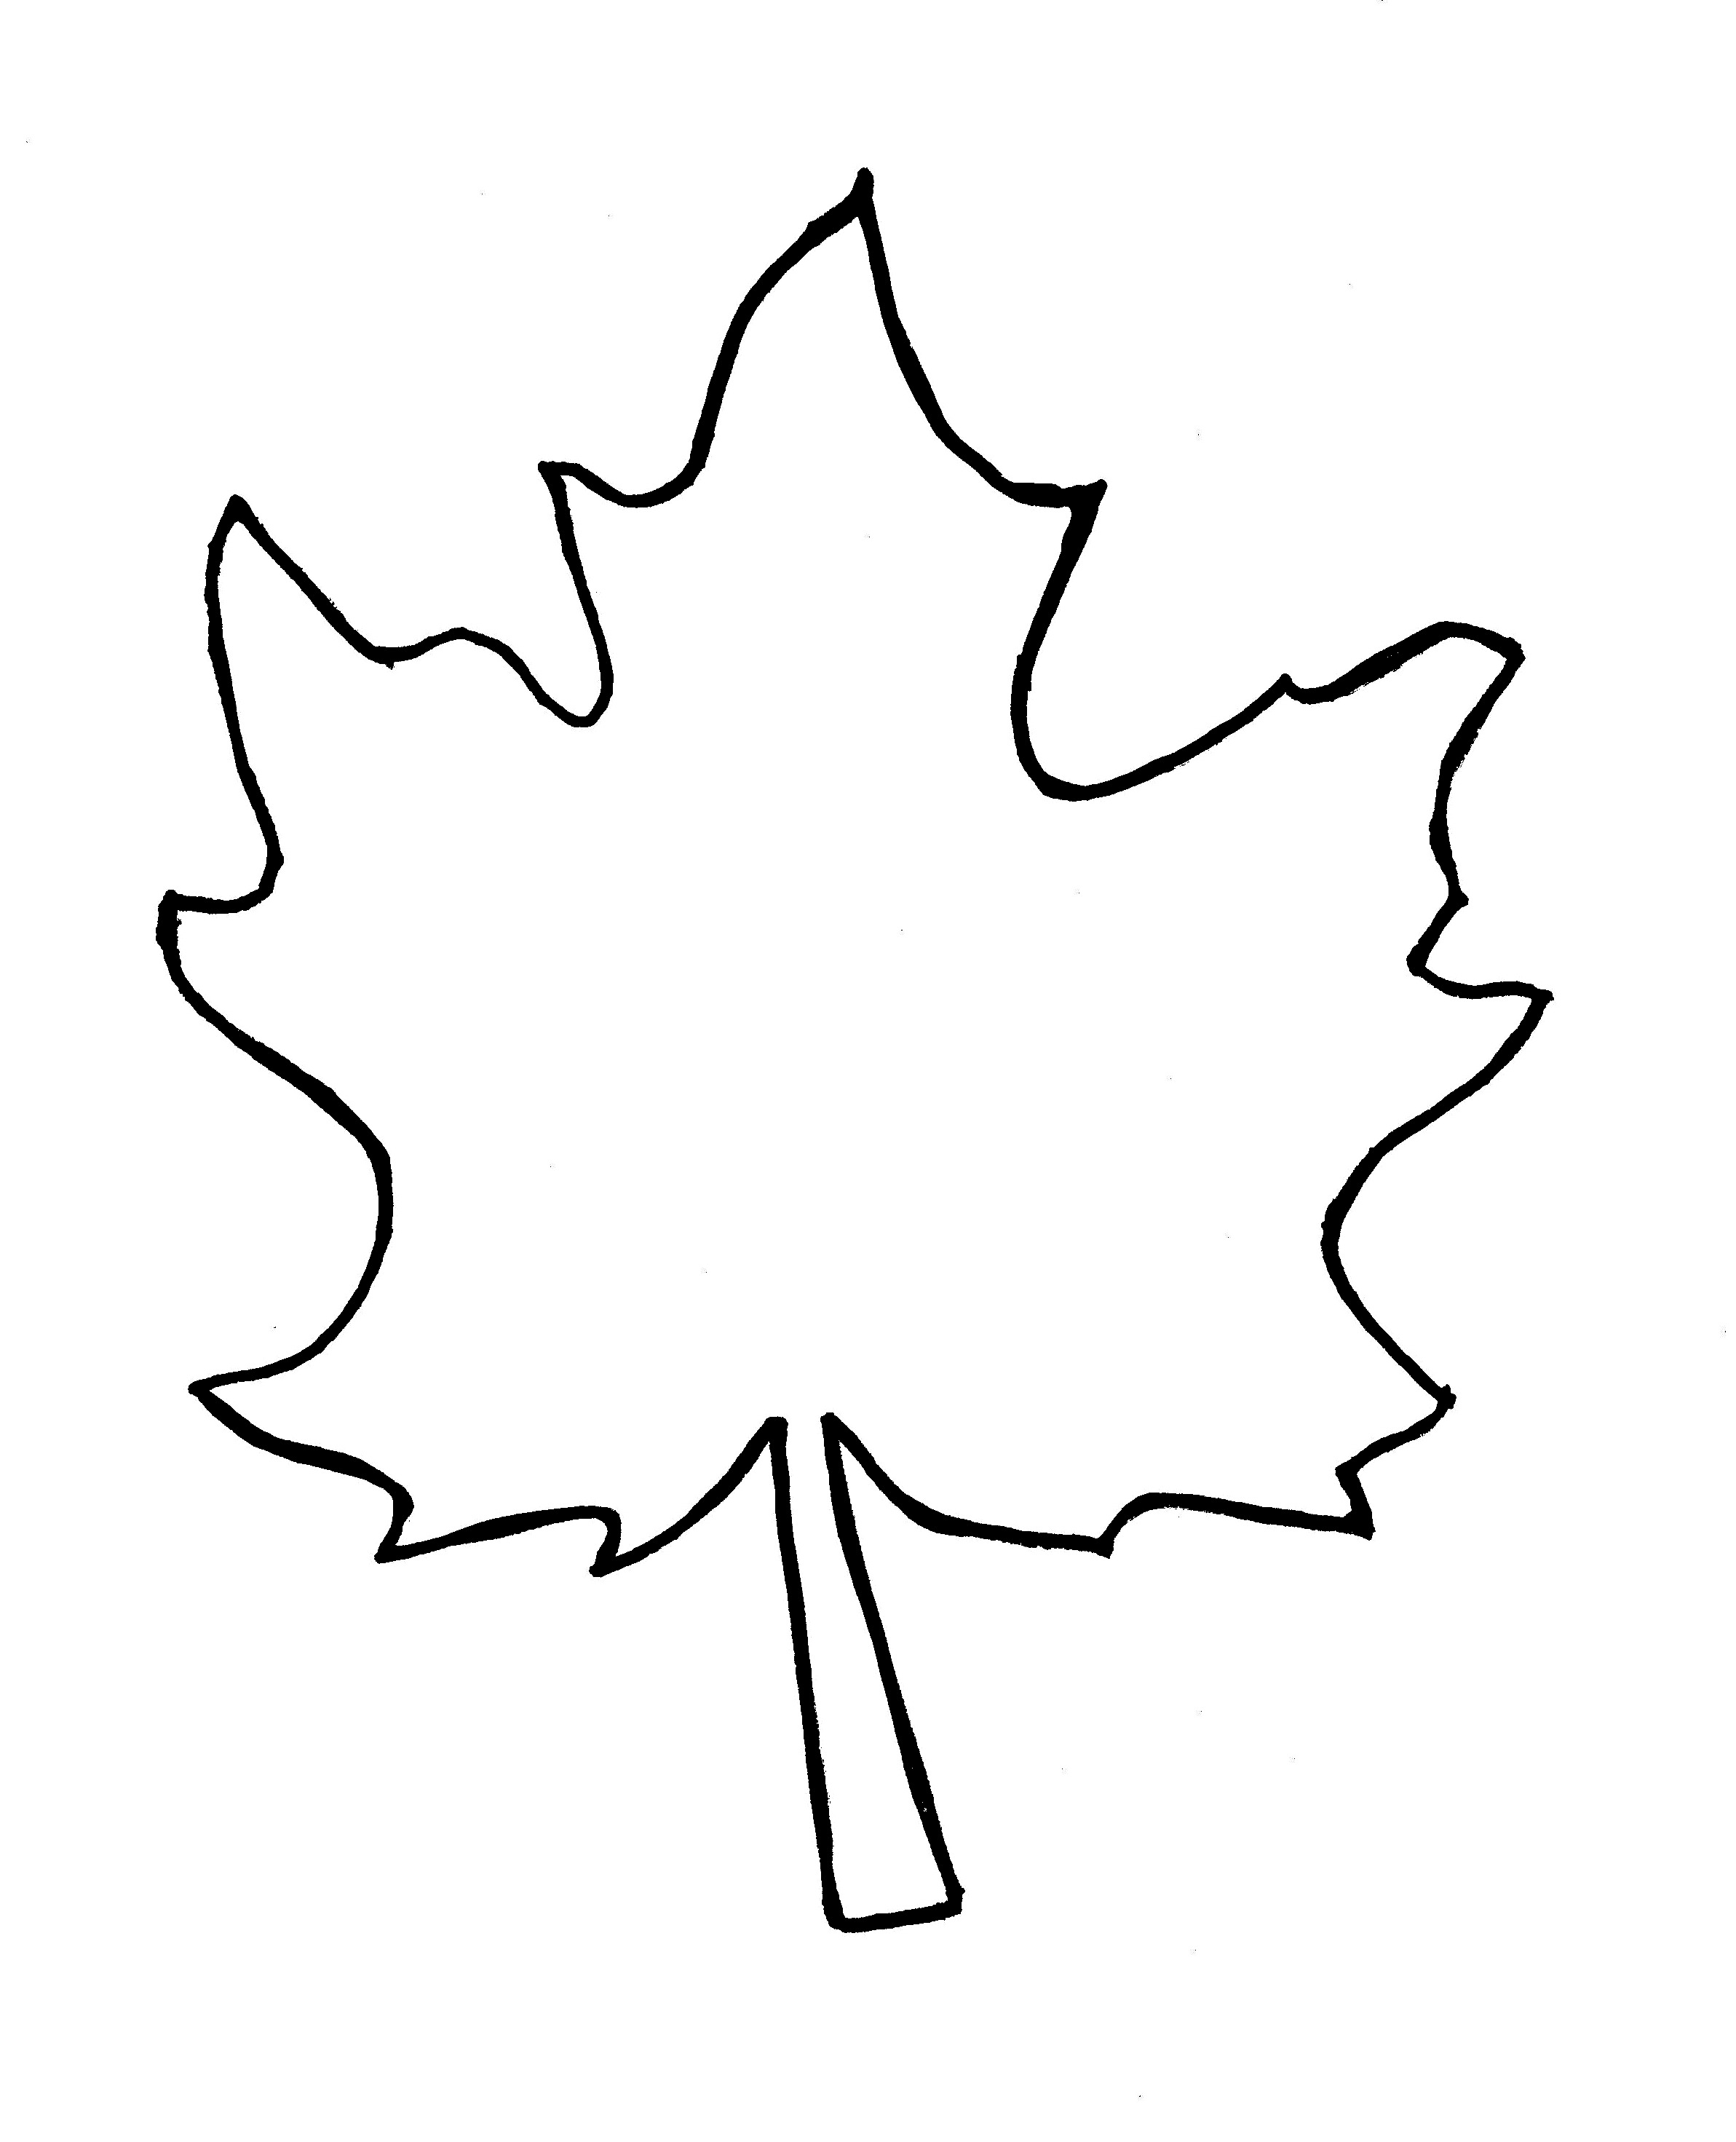 Free Autumn Leaf Outline, Download Free Clip Art, Free Clip